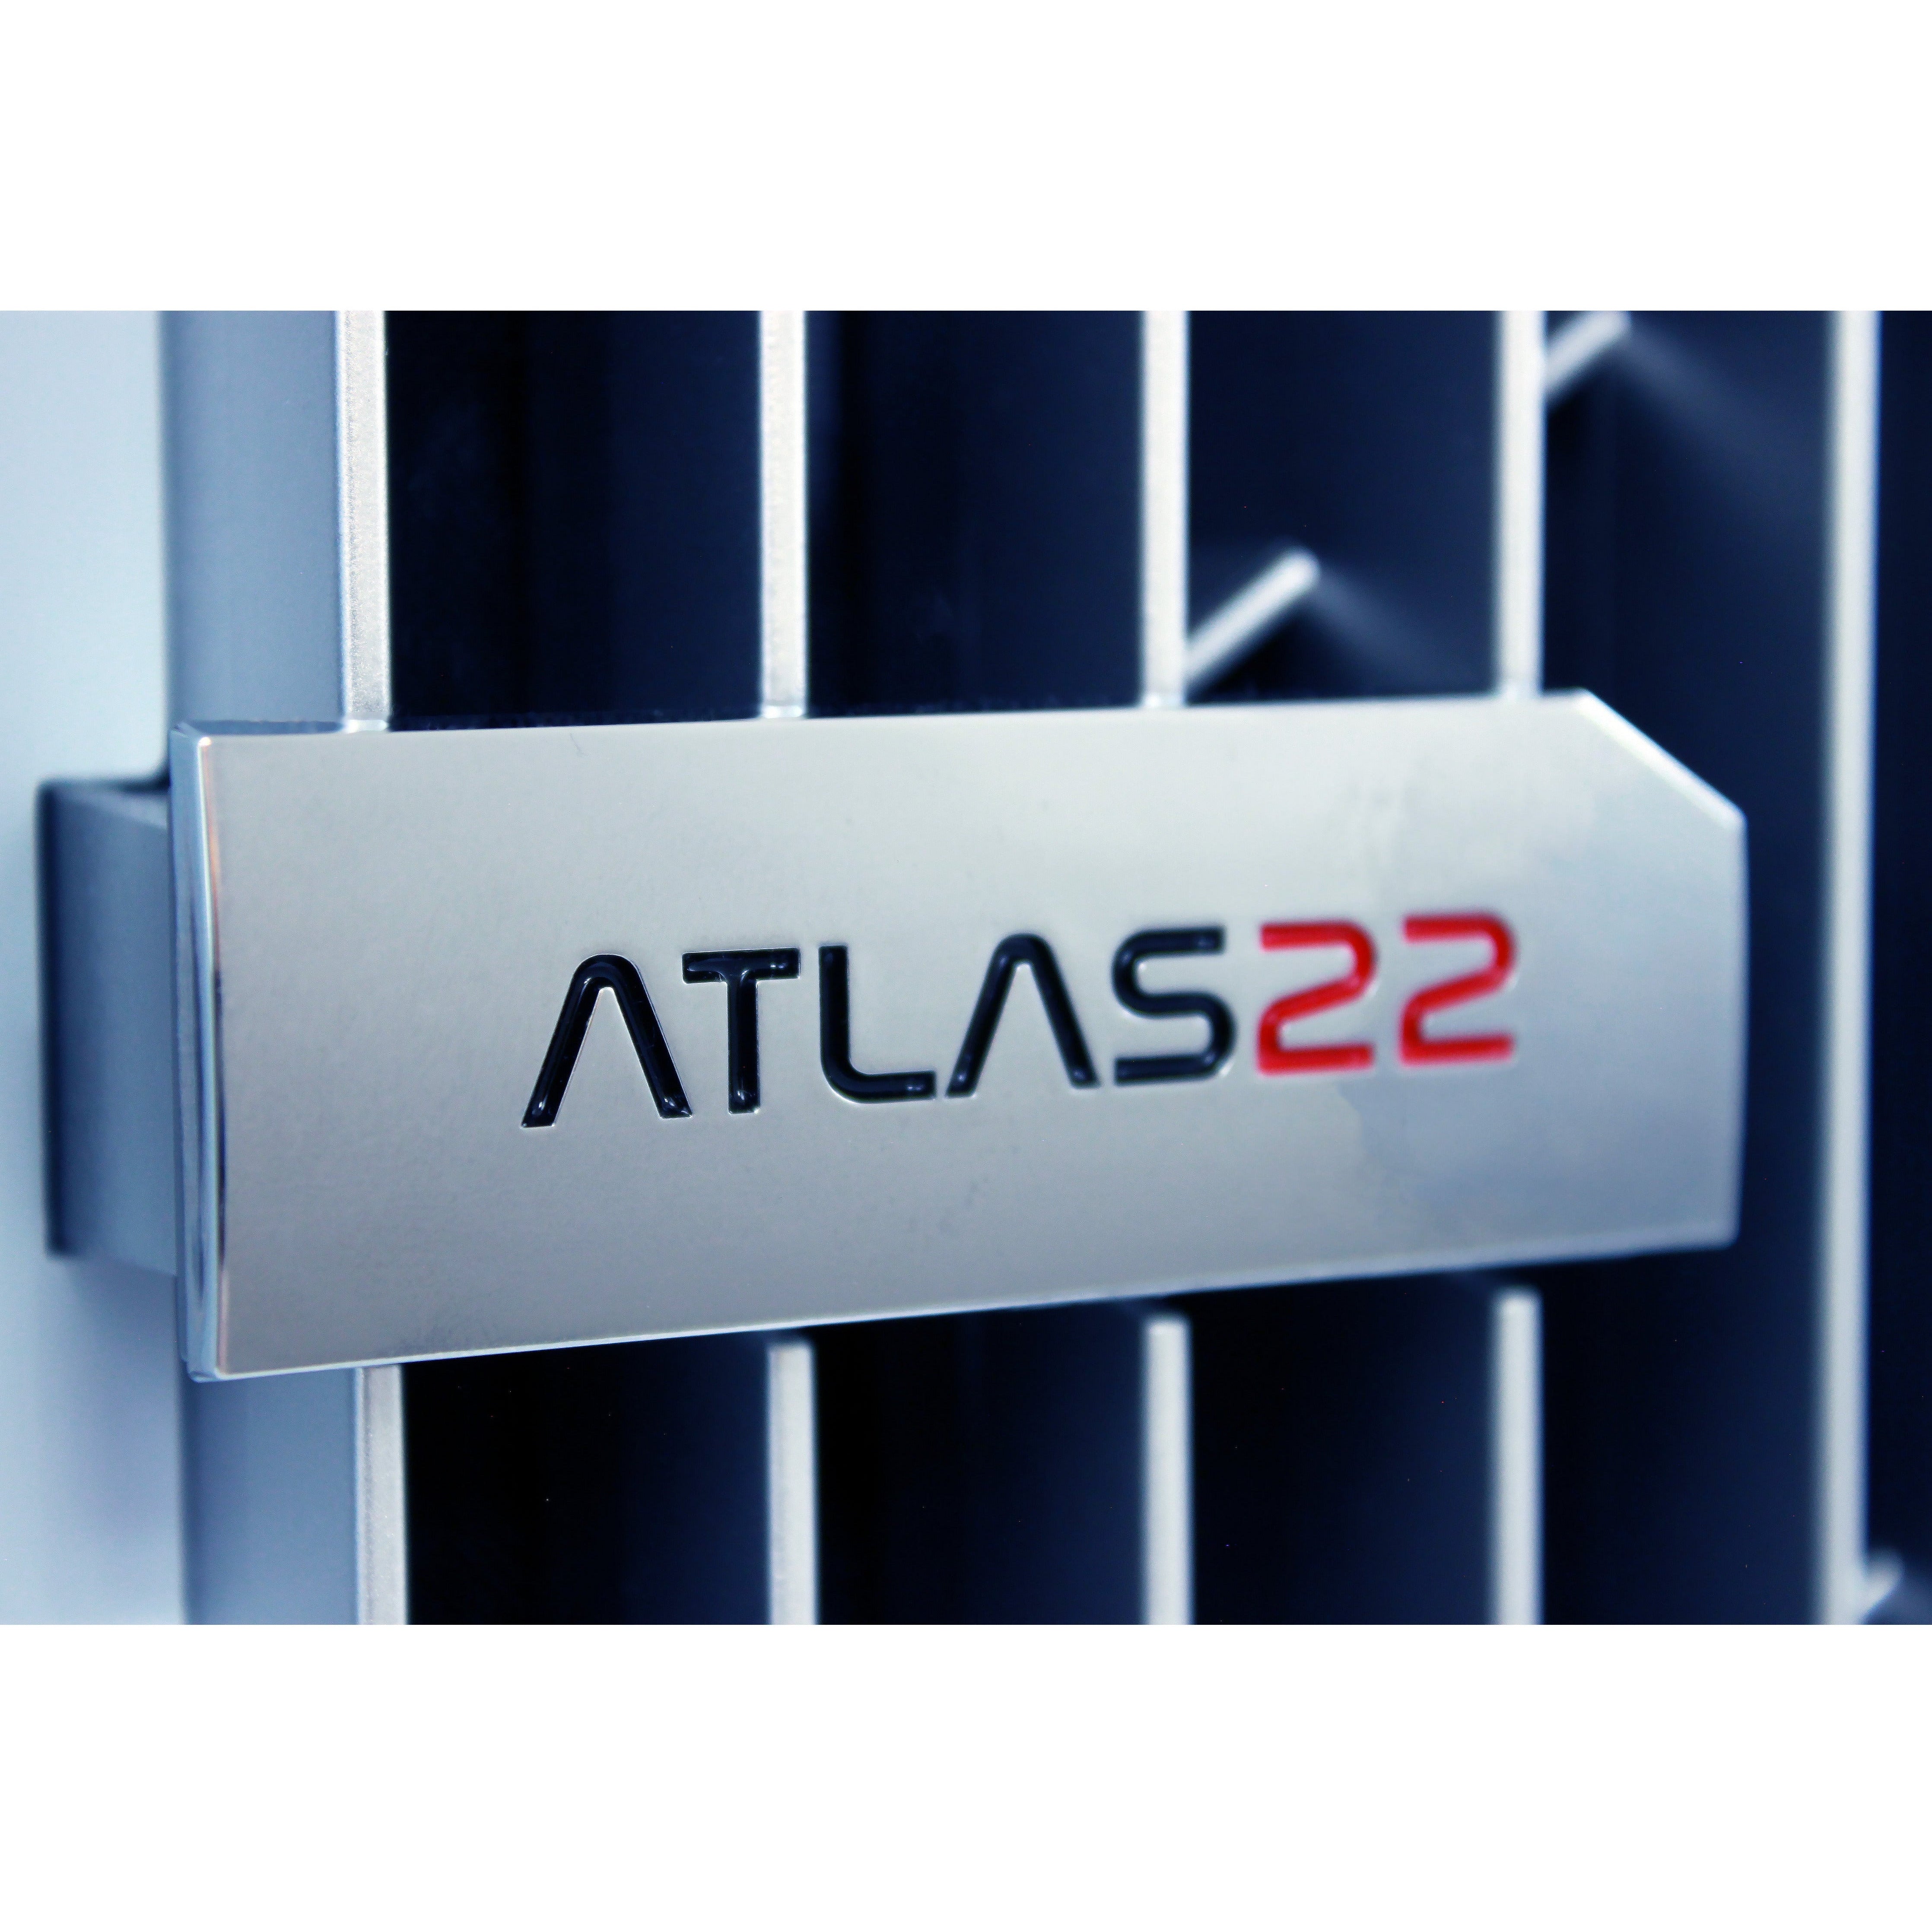 ATLAS22 ULTRA SE